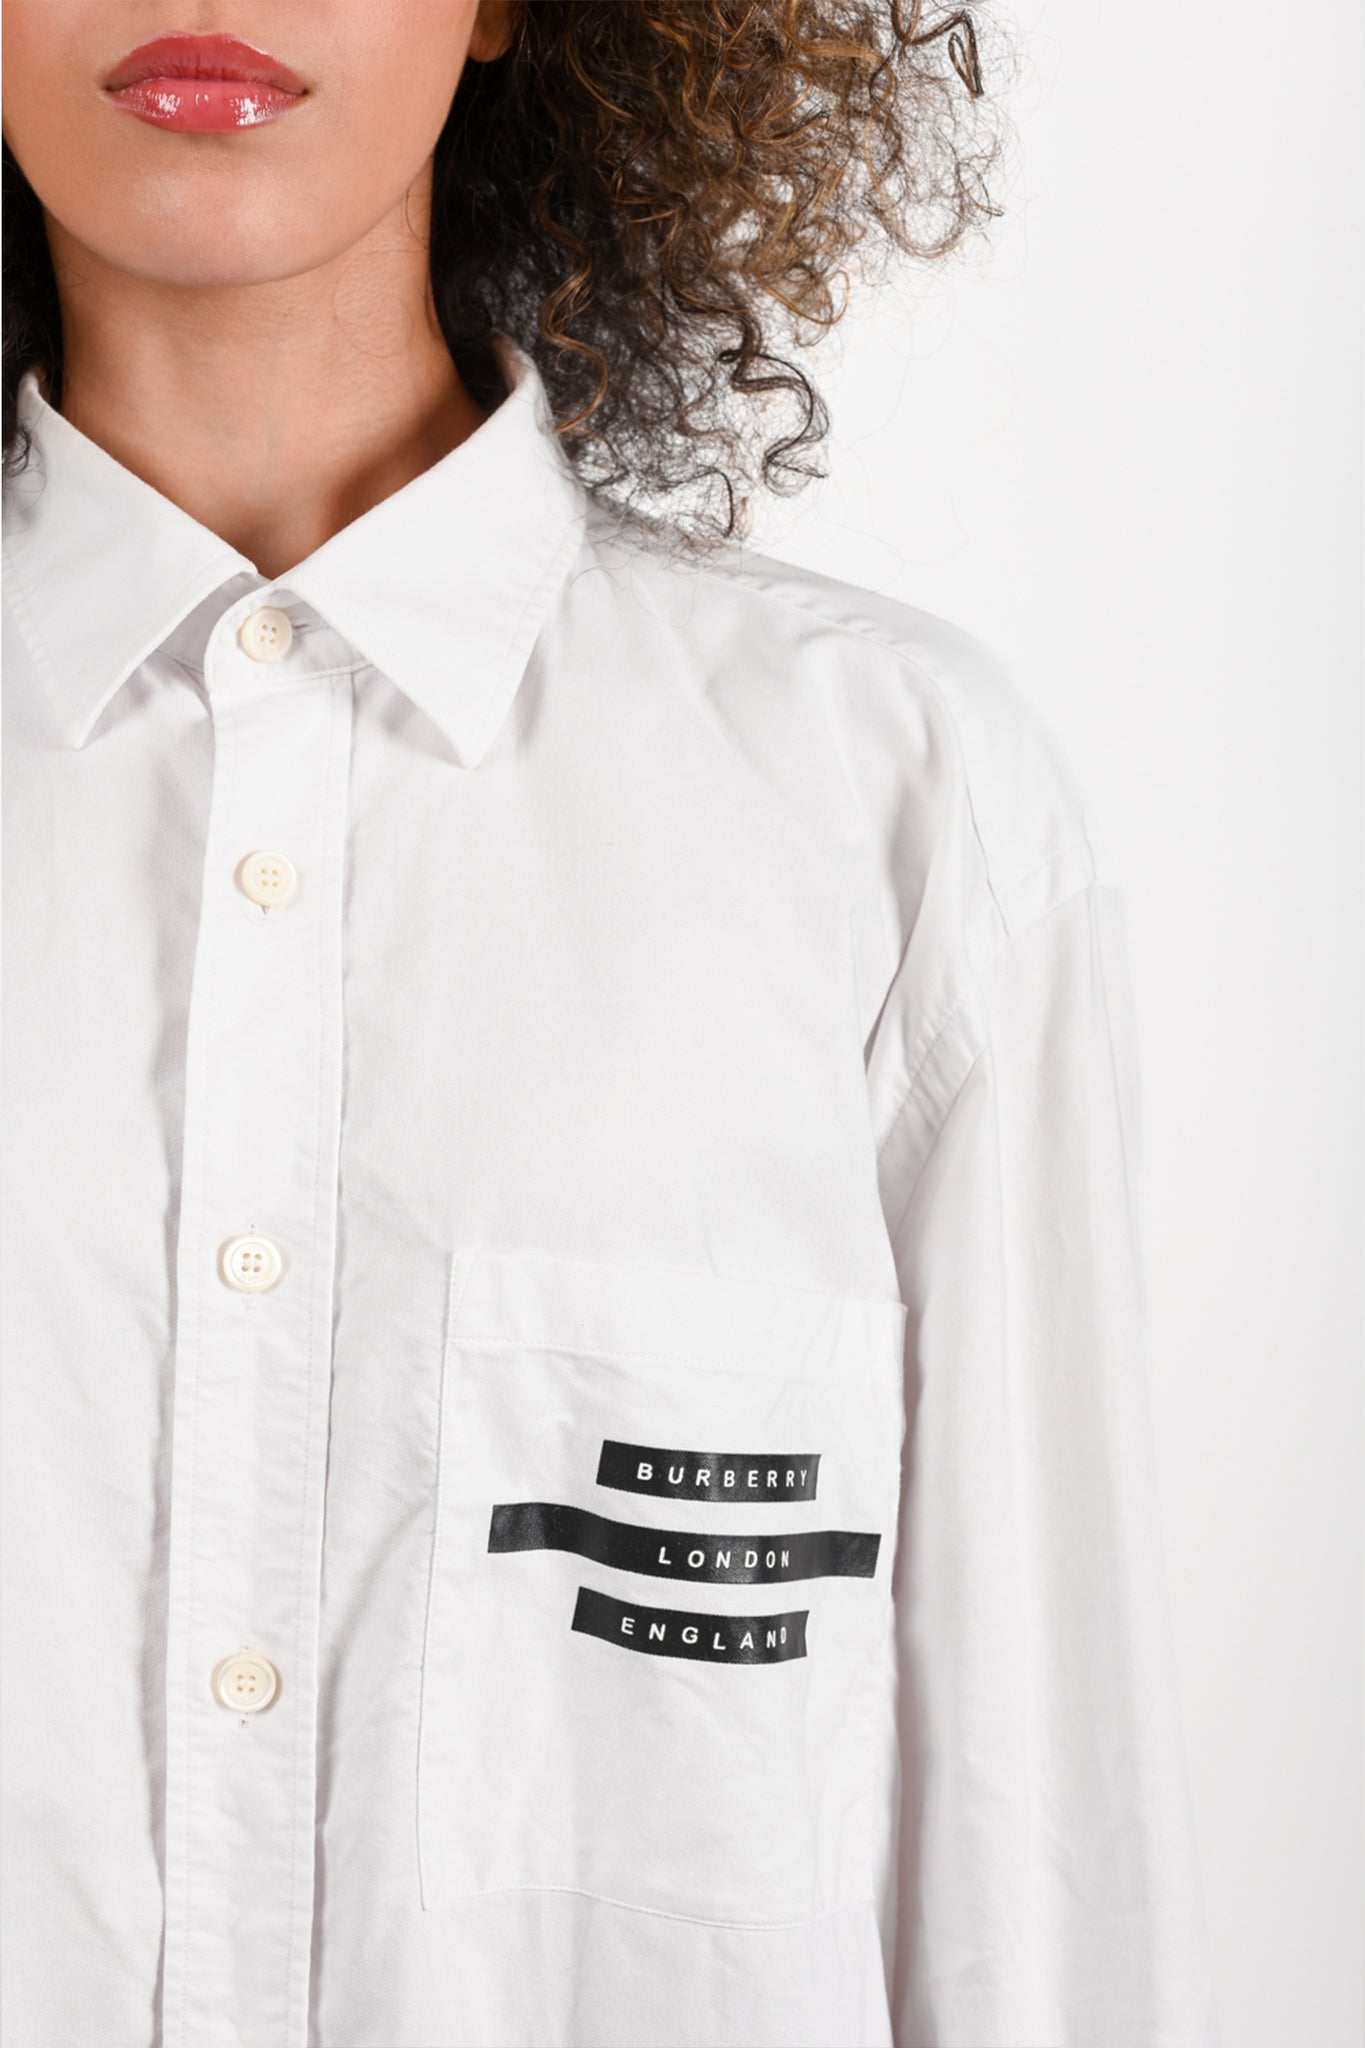 Burberry London White Graphic Button Down Shirt Size XXL